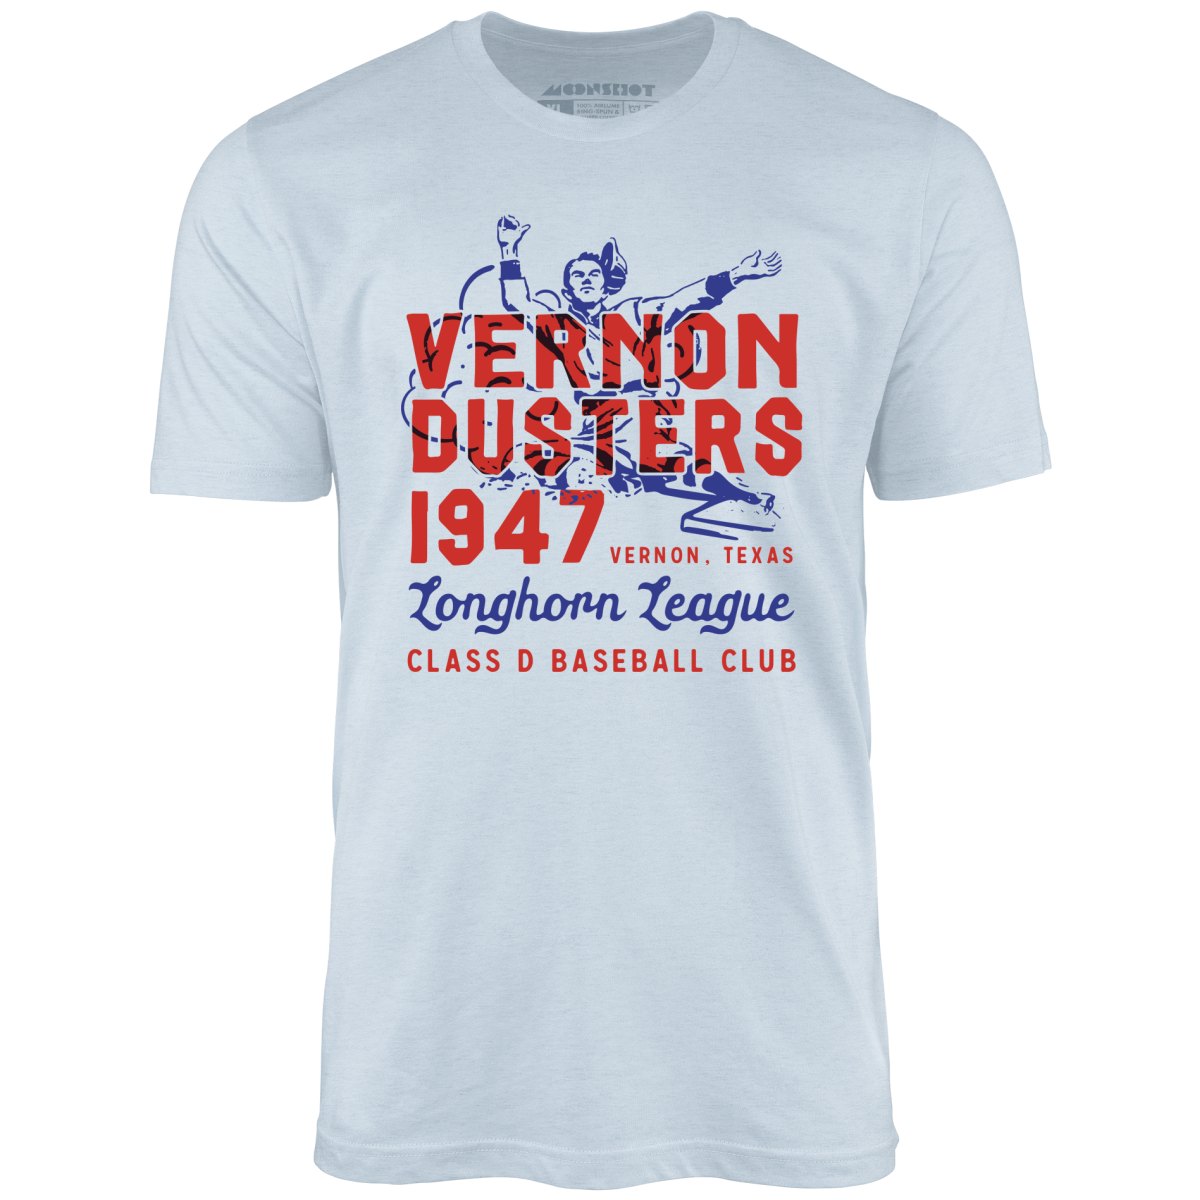 Vernon Dusters - Texas - Vintage Defunct Baseball Teams - Unisex T-Shirt